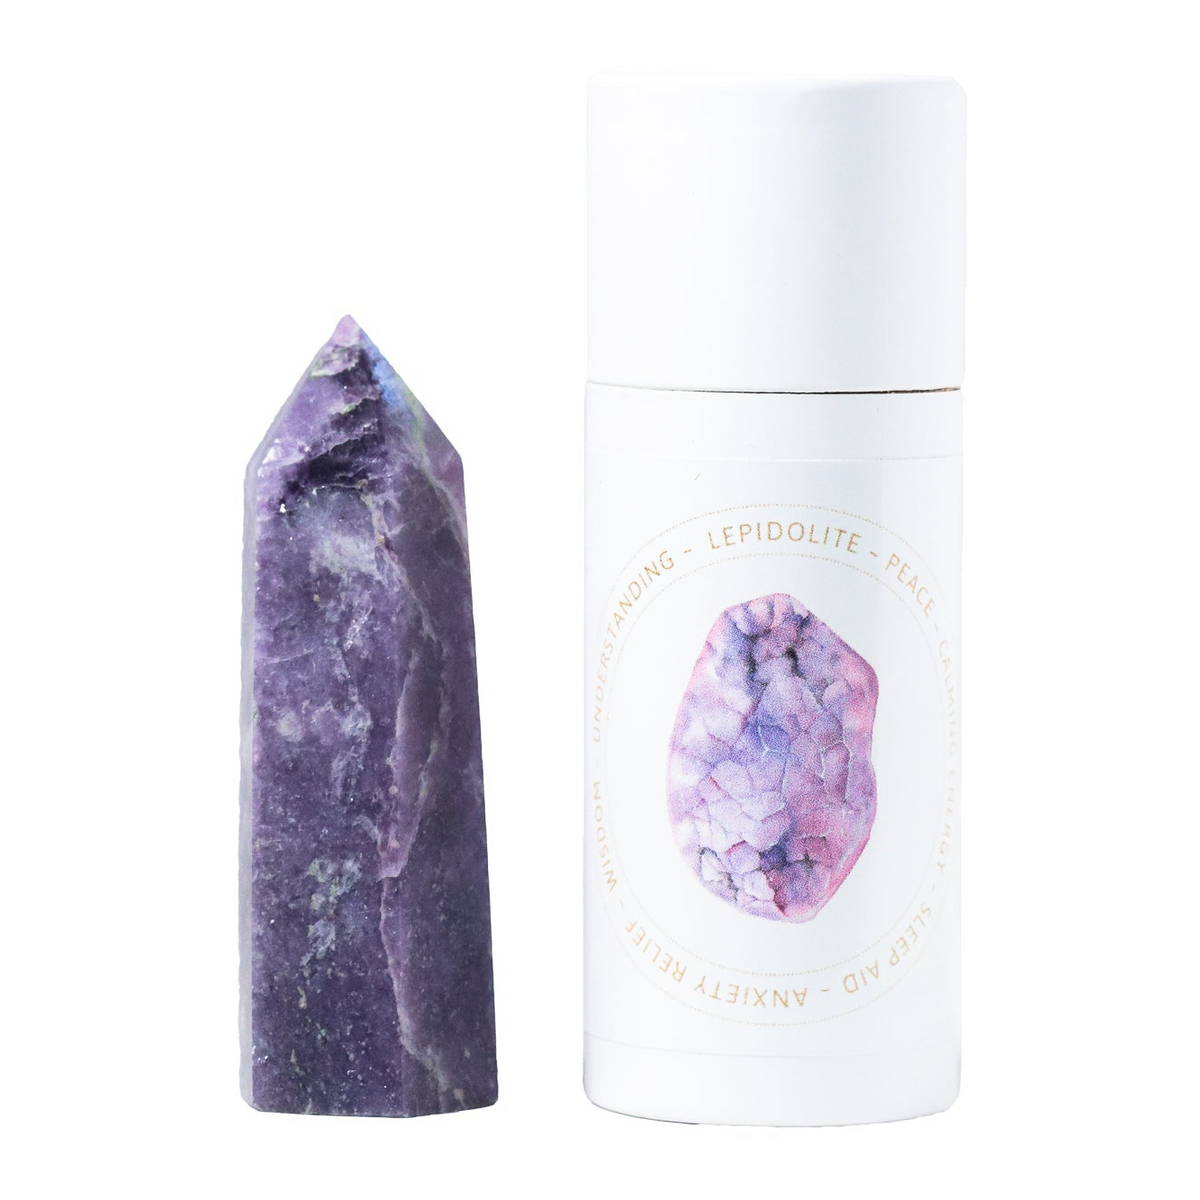 a purple stone next to a white tube of deodorant